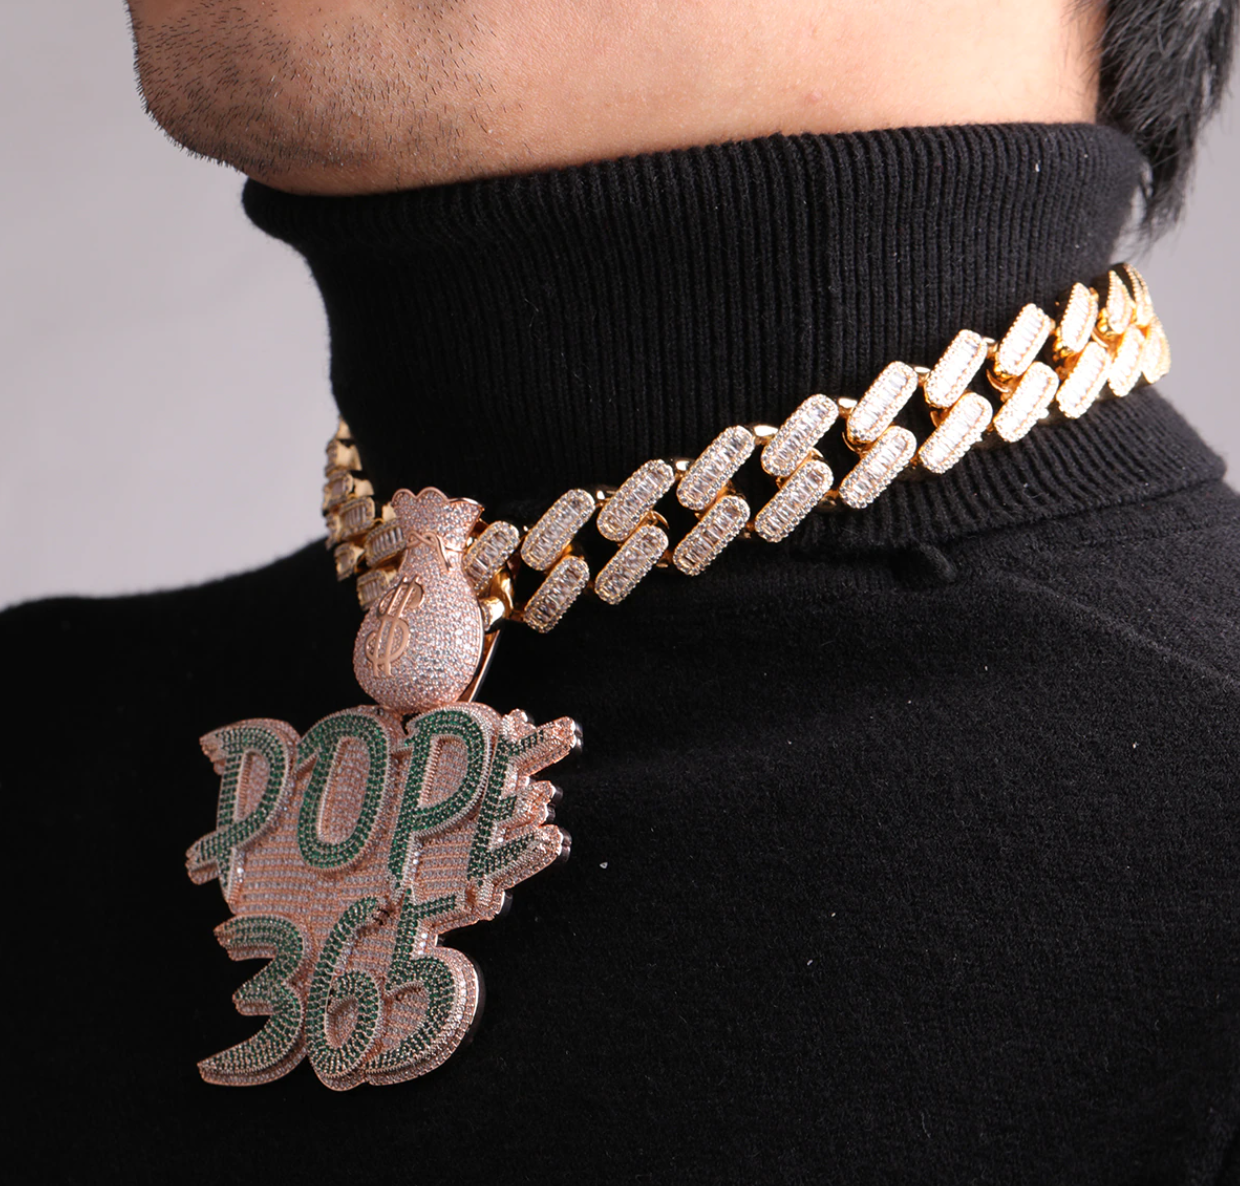 Custom Cash Money Bag Green Letter Necklace Name Pendant Chain Gold Silver Diamond Hip Hop Jewelry #44